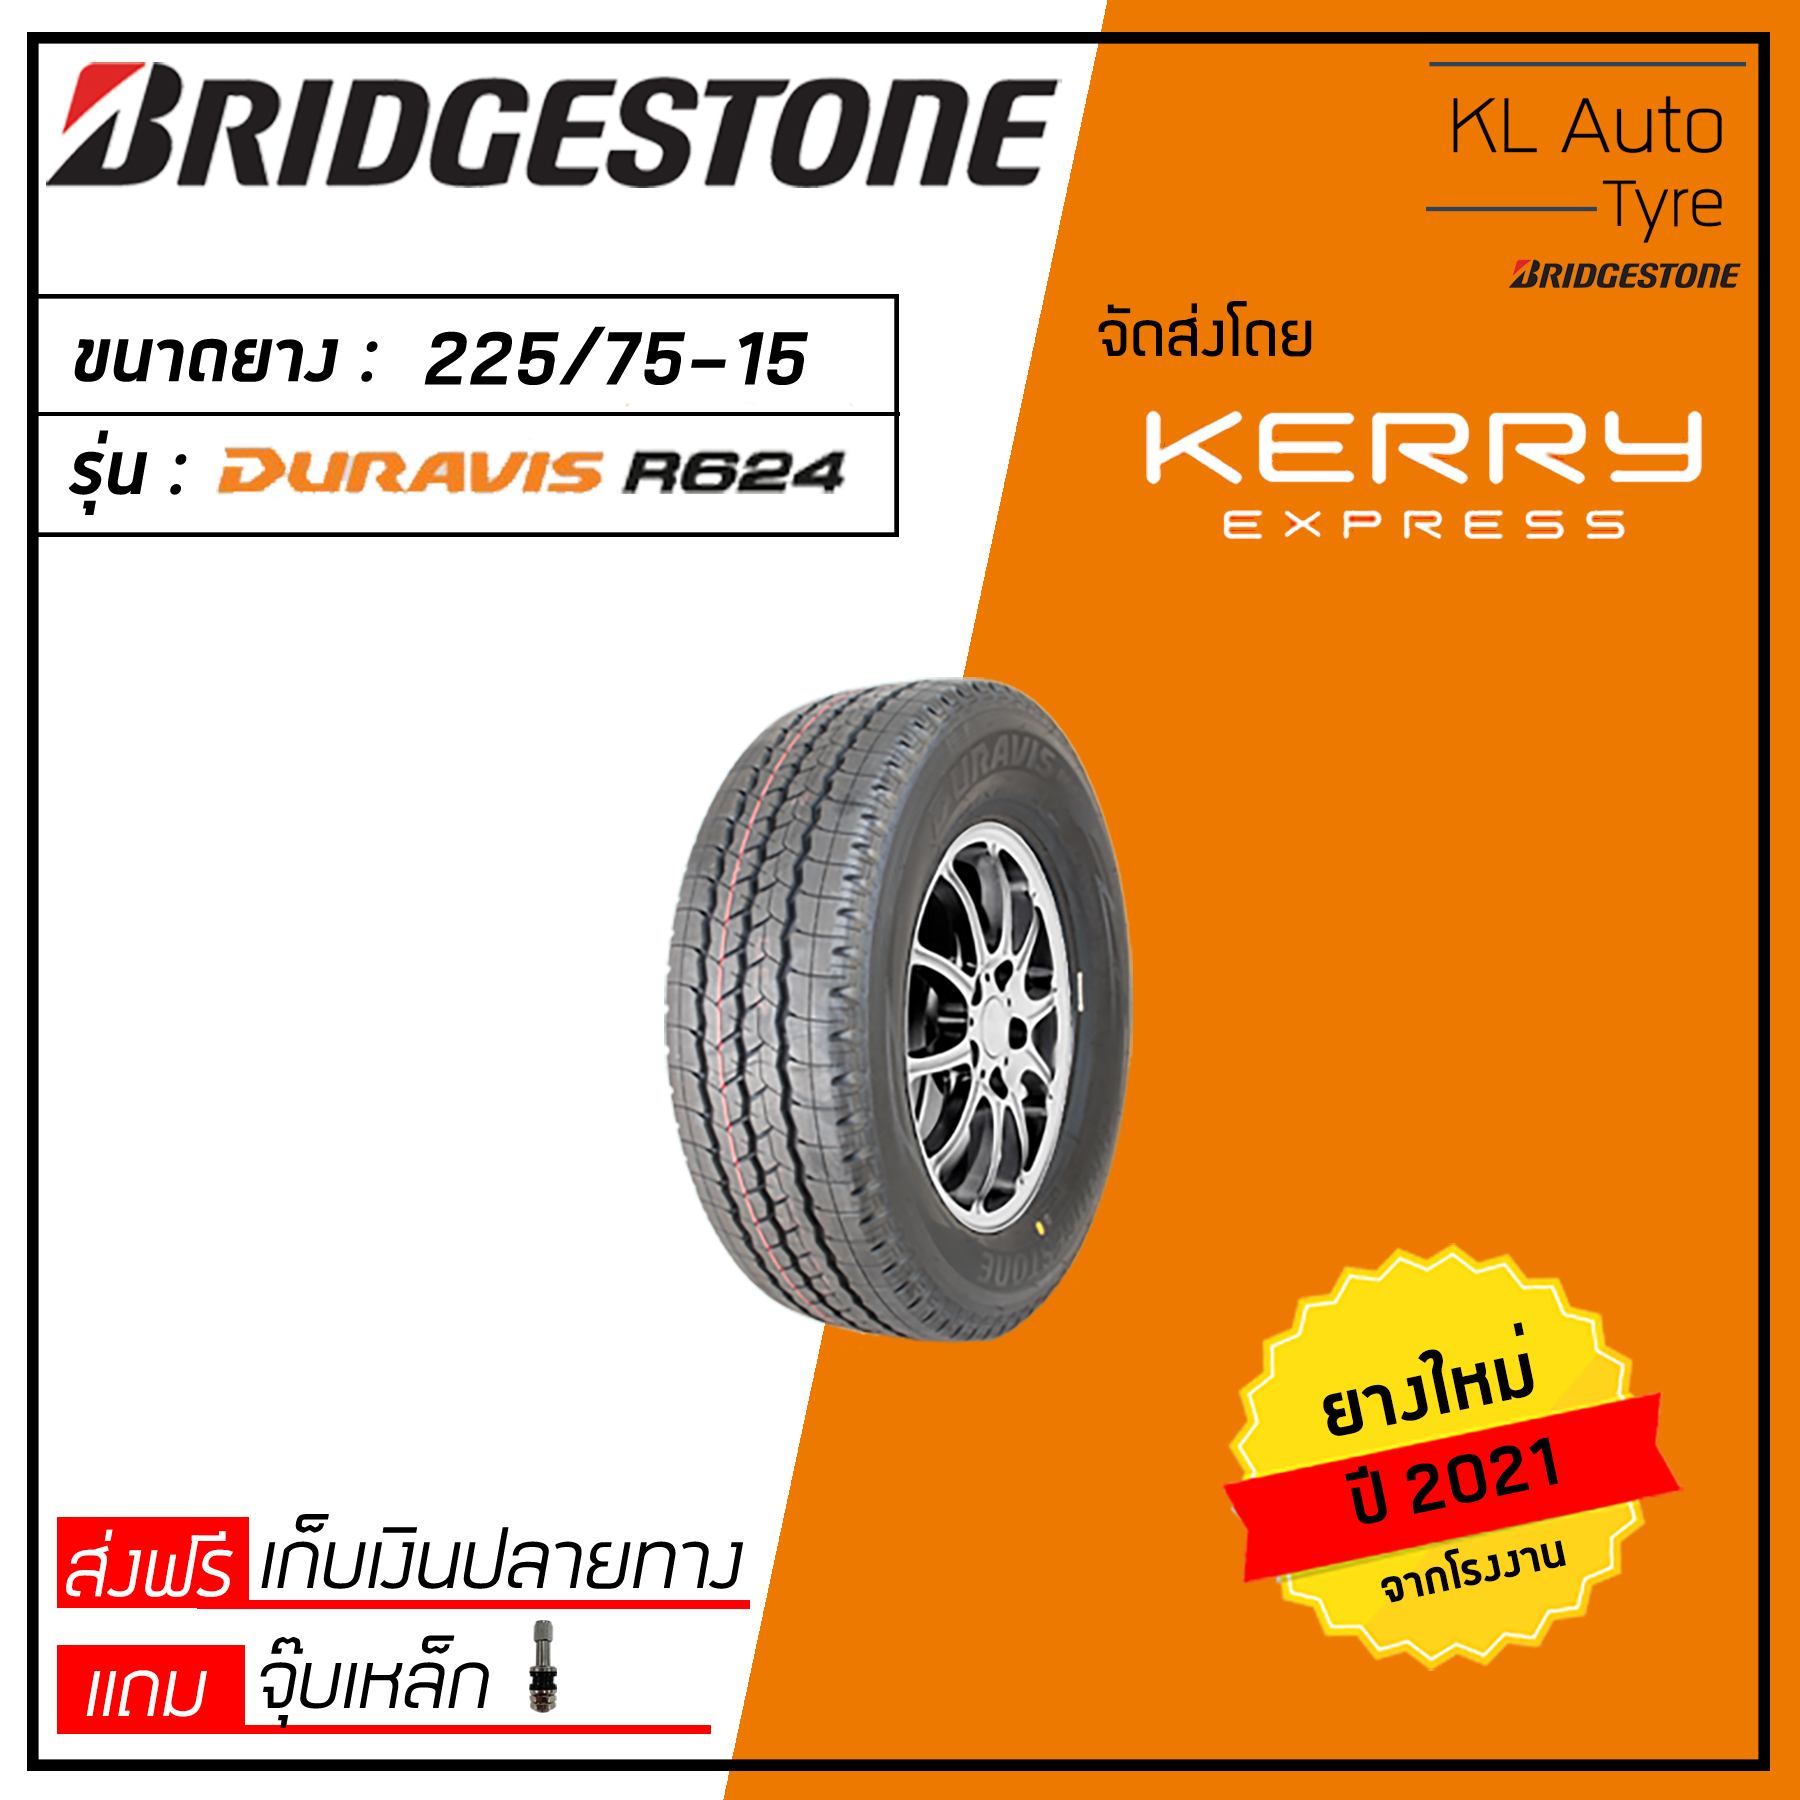 Bridgestone 225/75-15 R624 1 เส้น ปี 21 (ฟรี จุ๊บเหล็ก 1 ตัว มูลค่า 100 บาท)